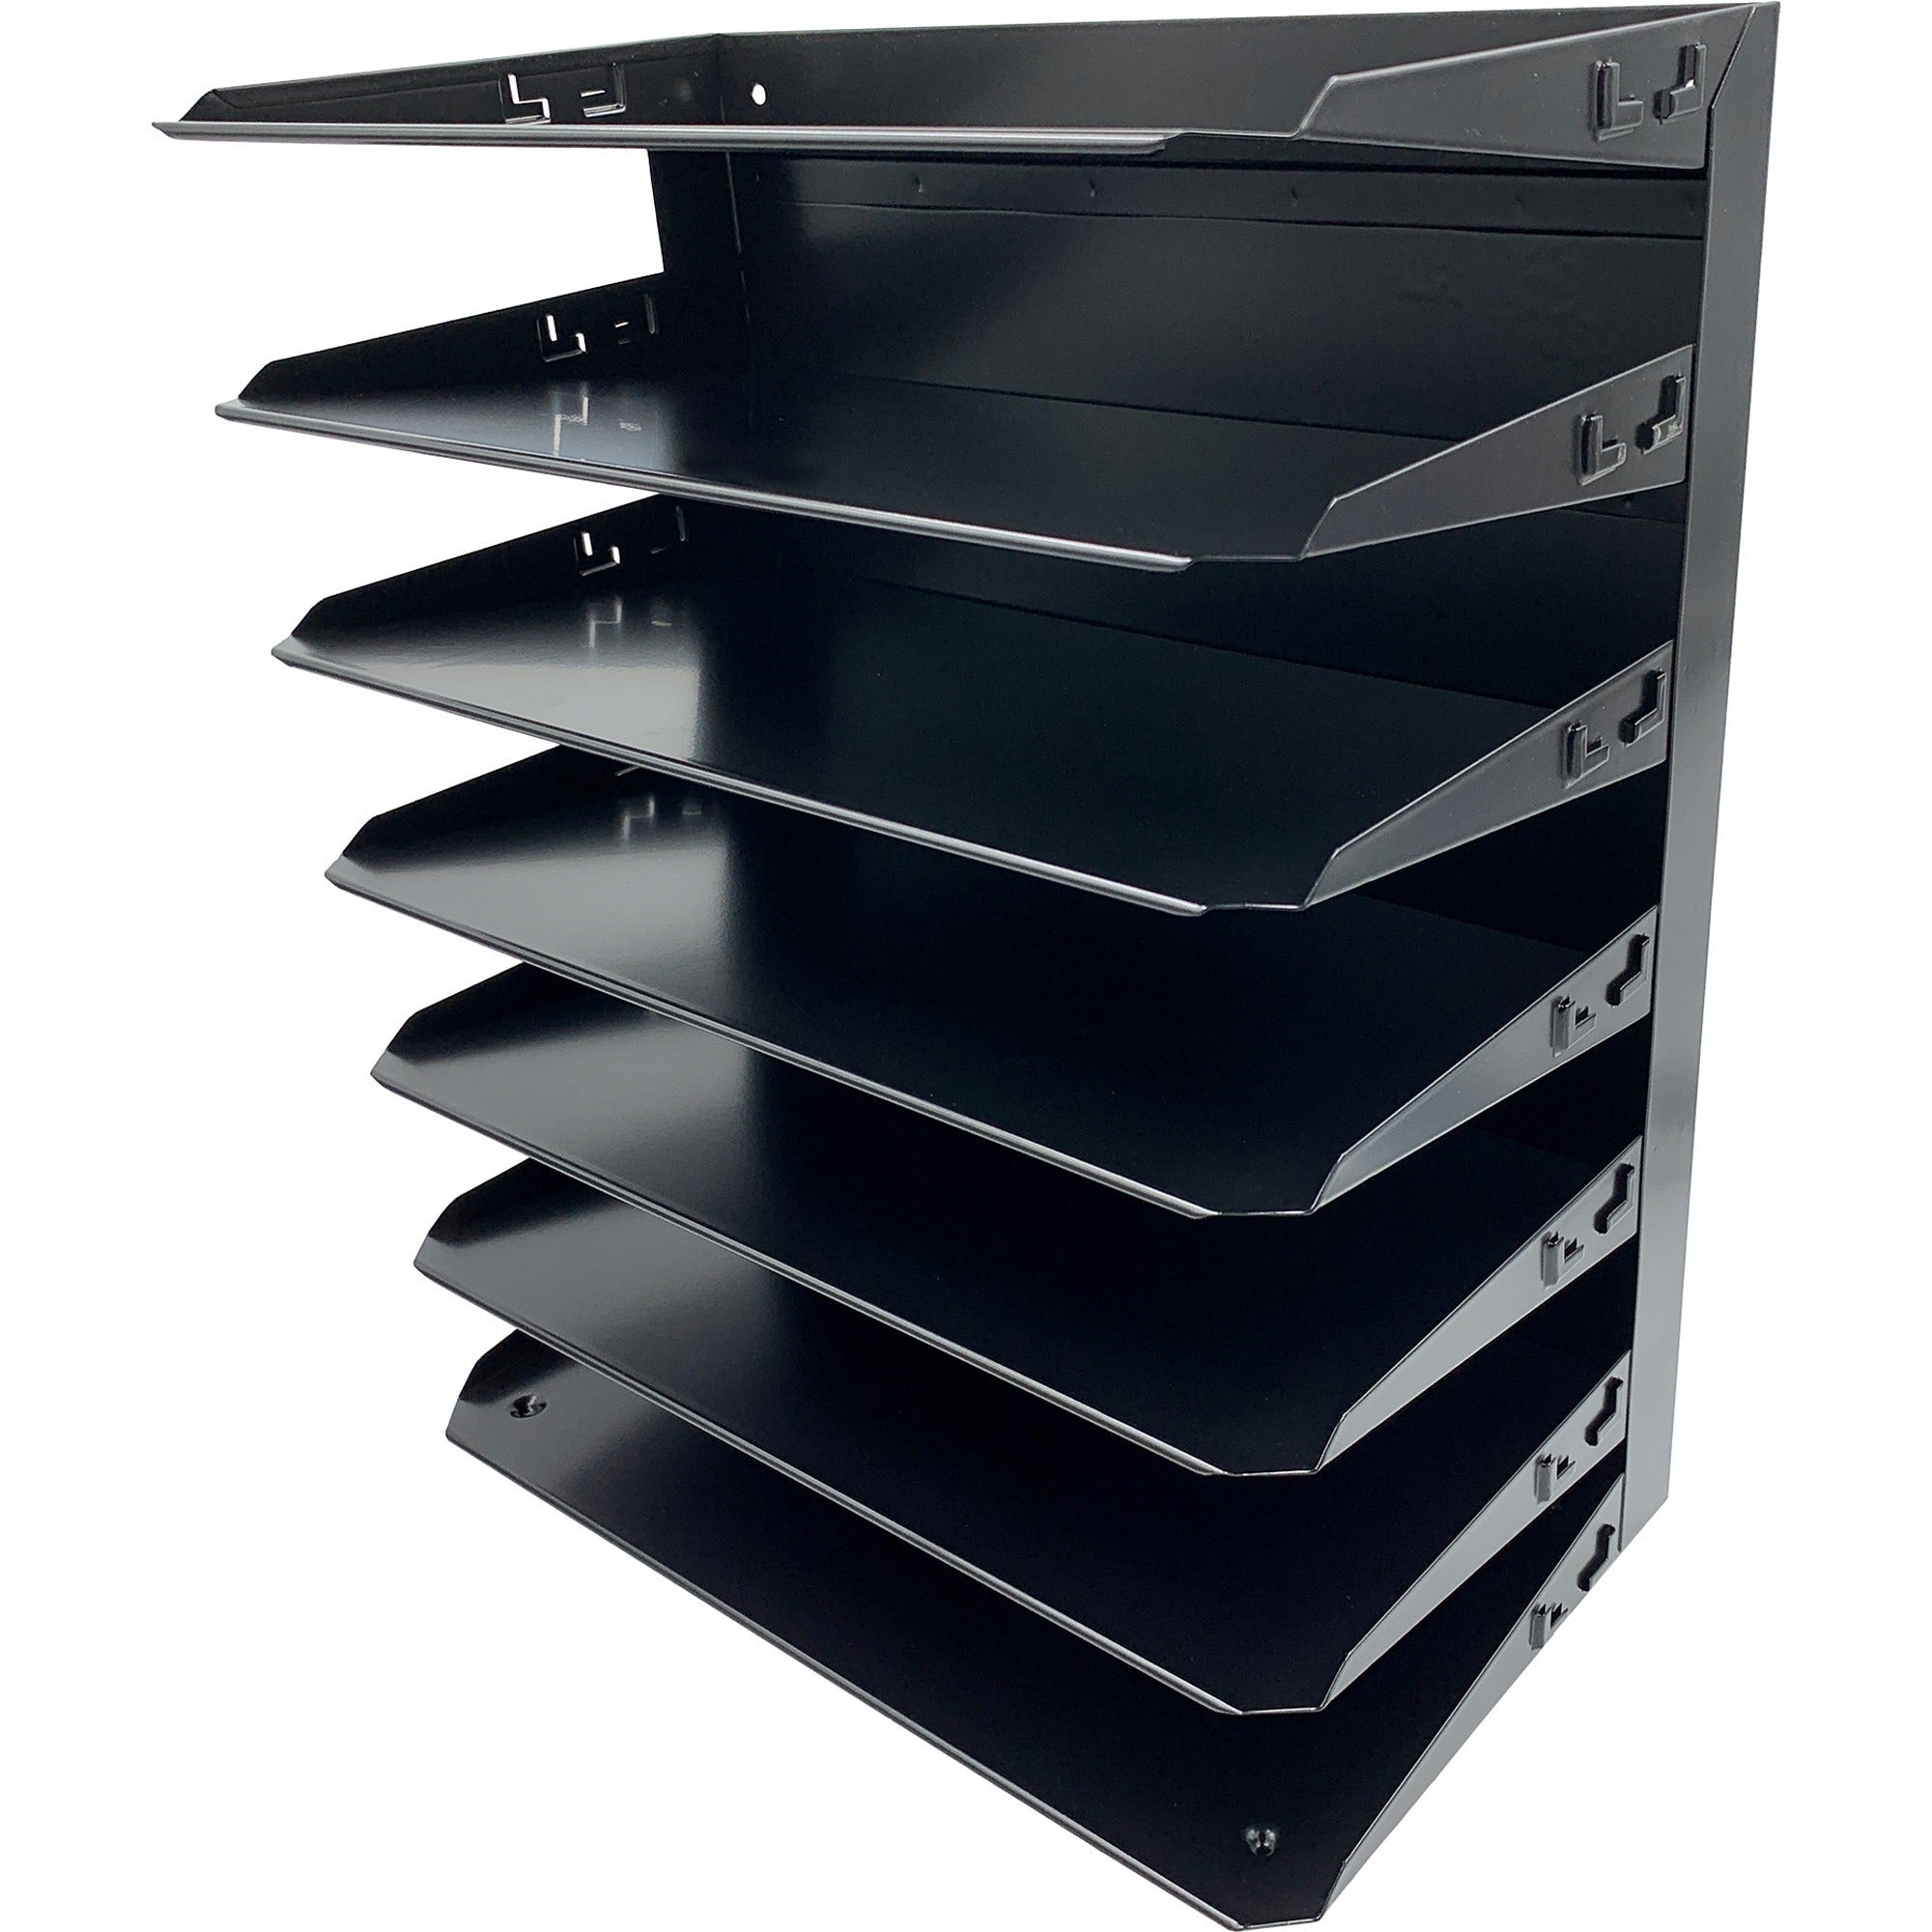 huron-horizontal-slots-desk-organizer-7-compartments-horizontal-15-height-x-15-width-x-88-depth-durable-black-steel-1-each_hurhasz0160 - 1